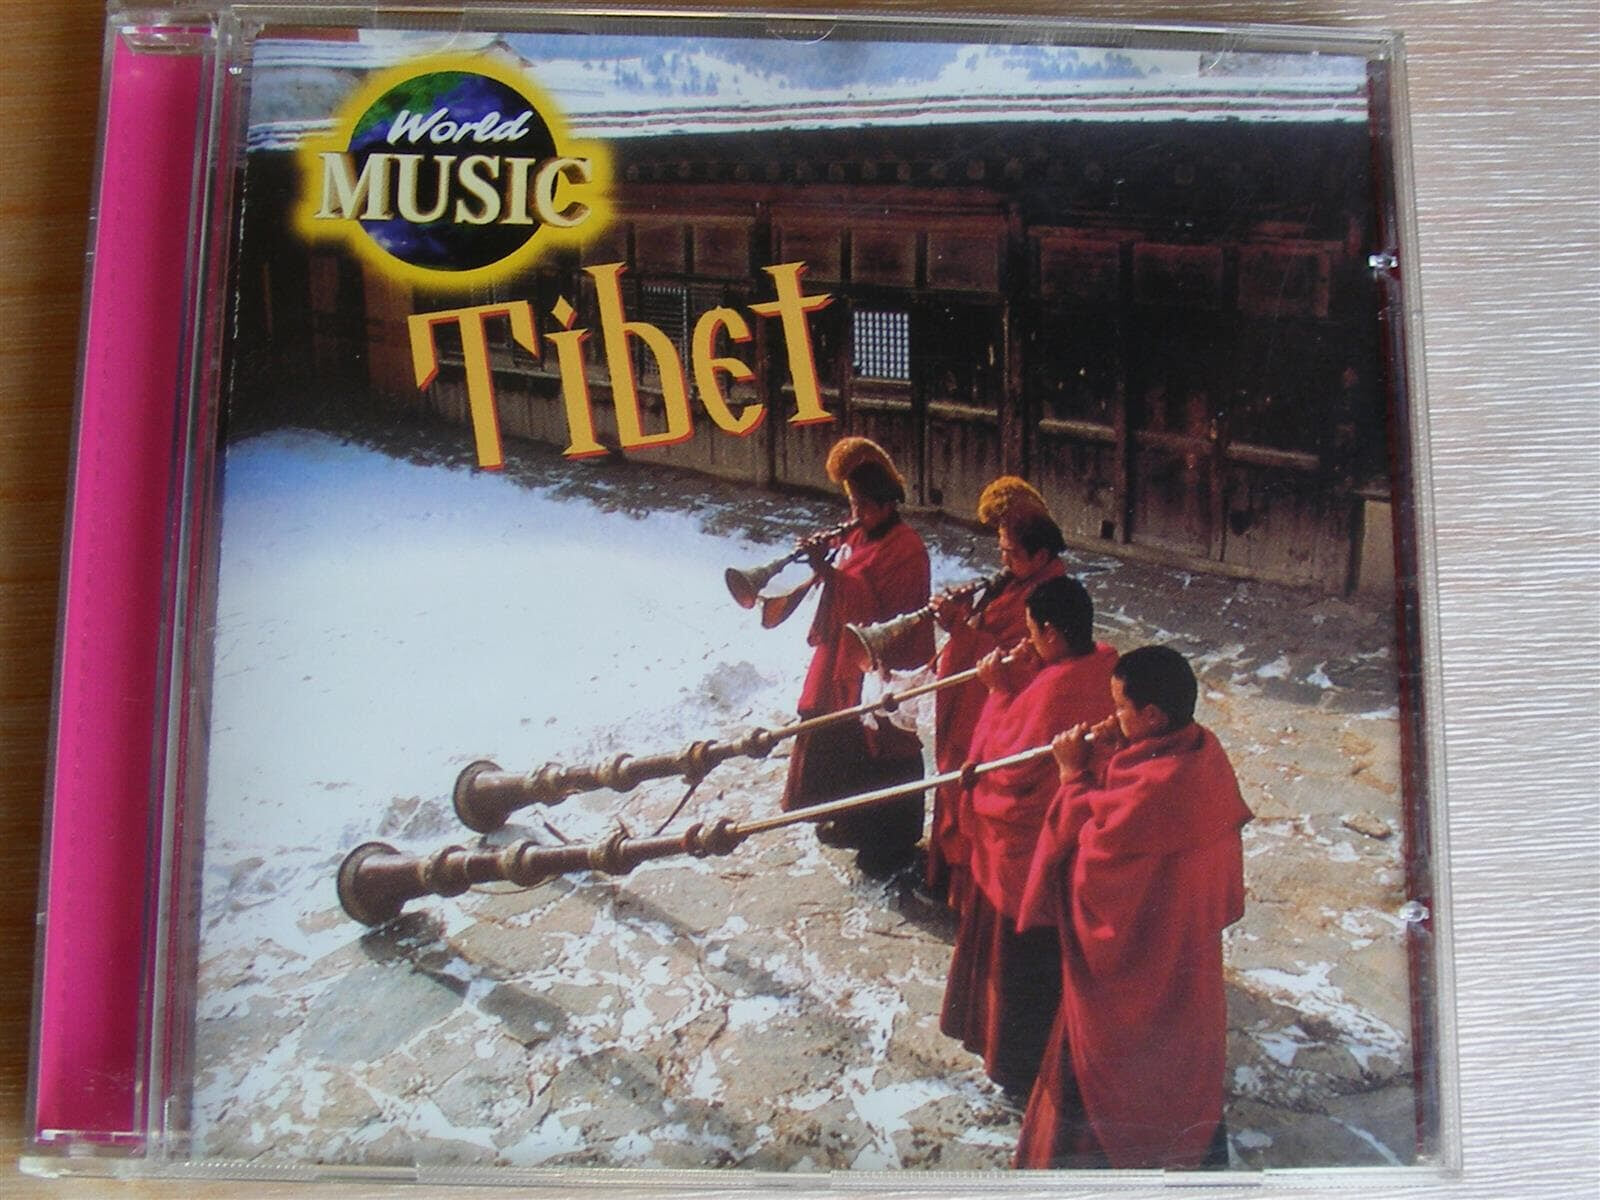 Tibet - world music